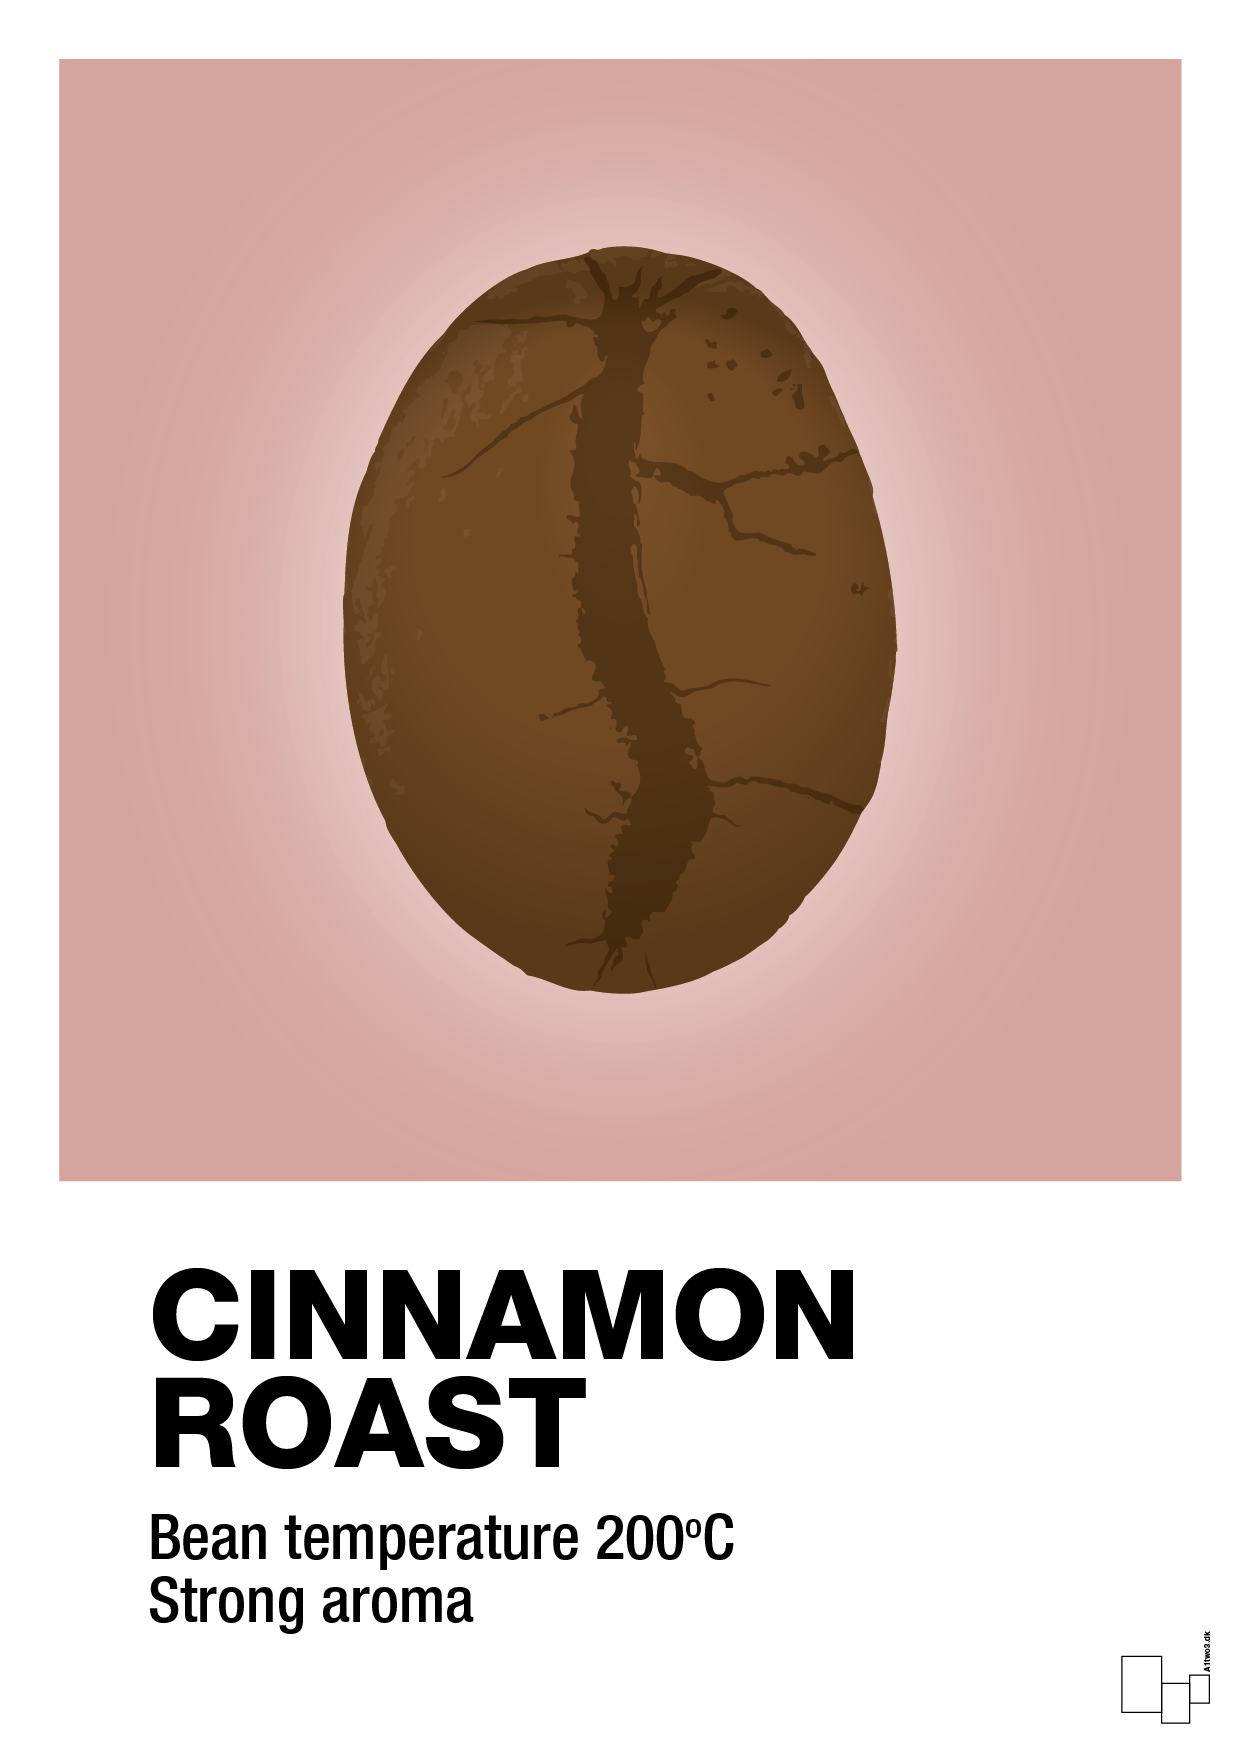 cinnamom roast - Plakat med Mad & Drikke i Bubble Shell